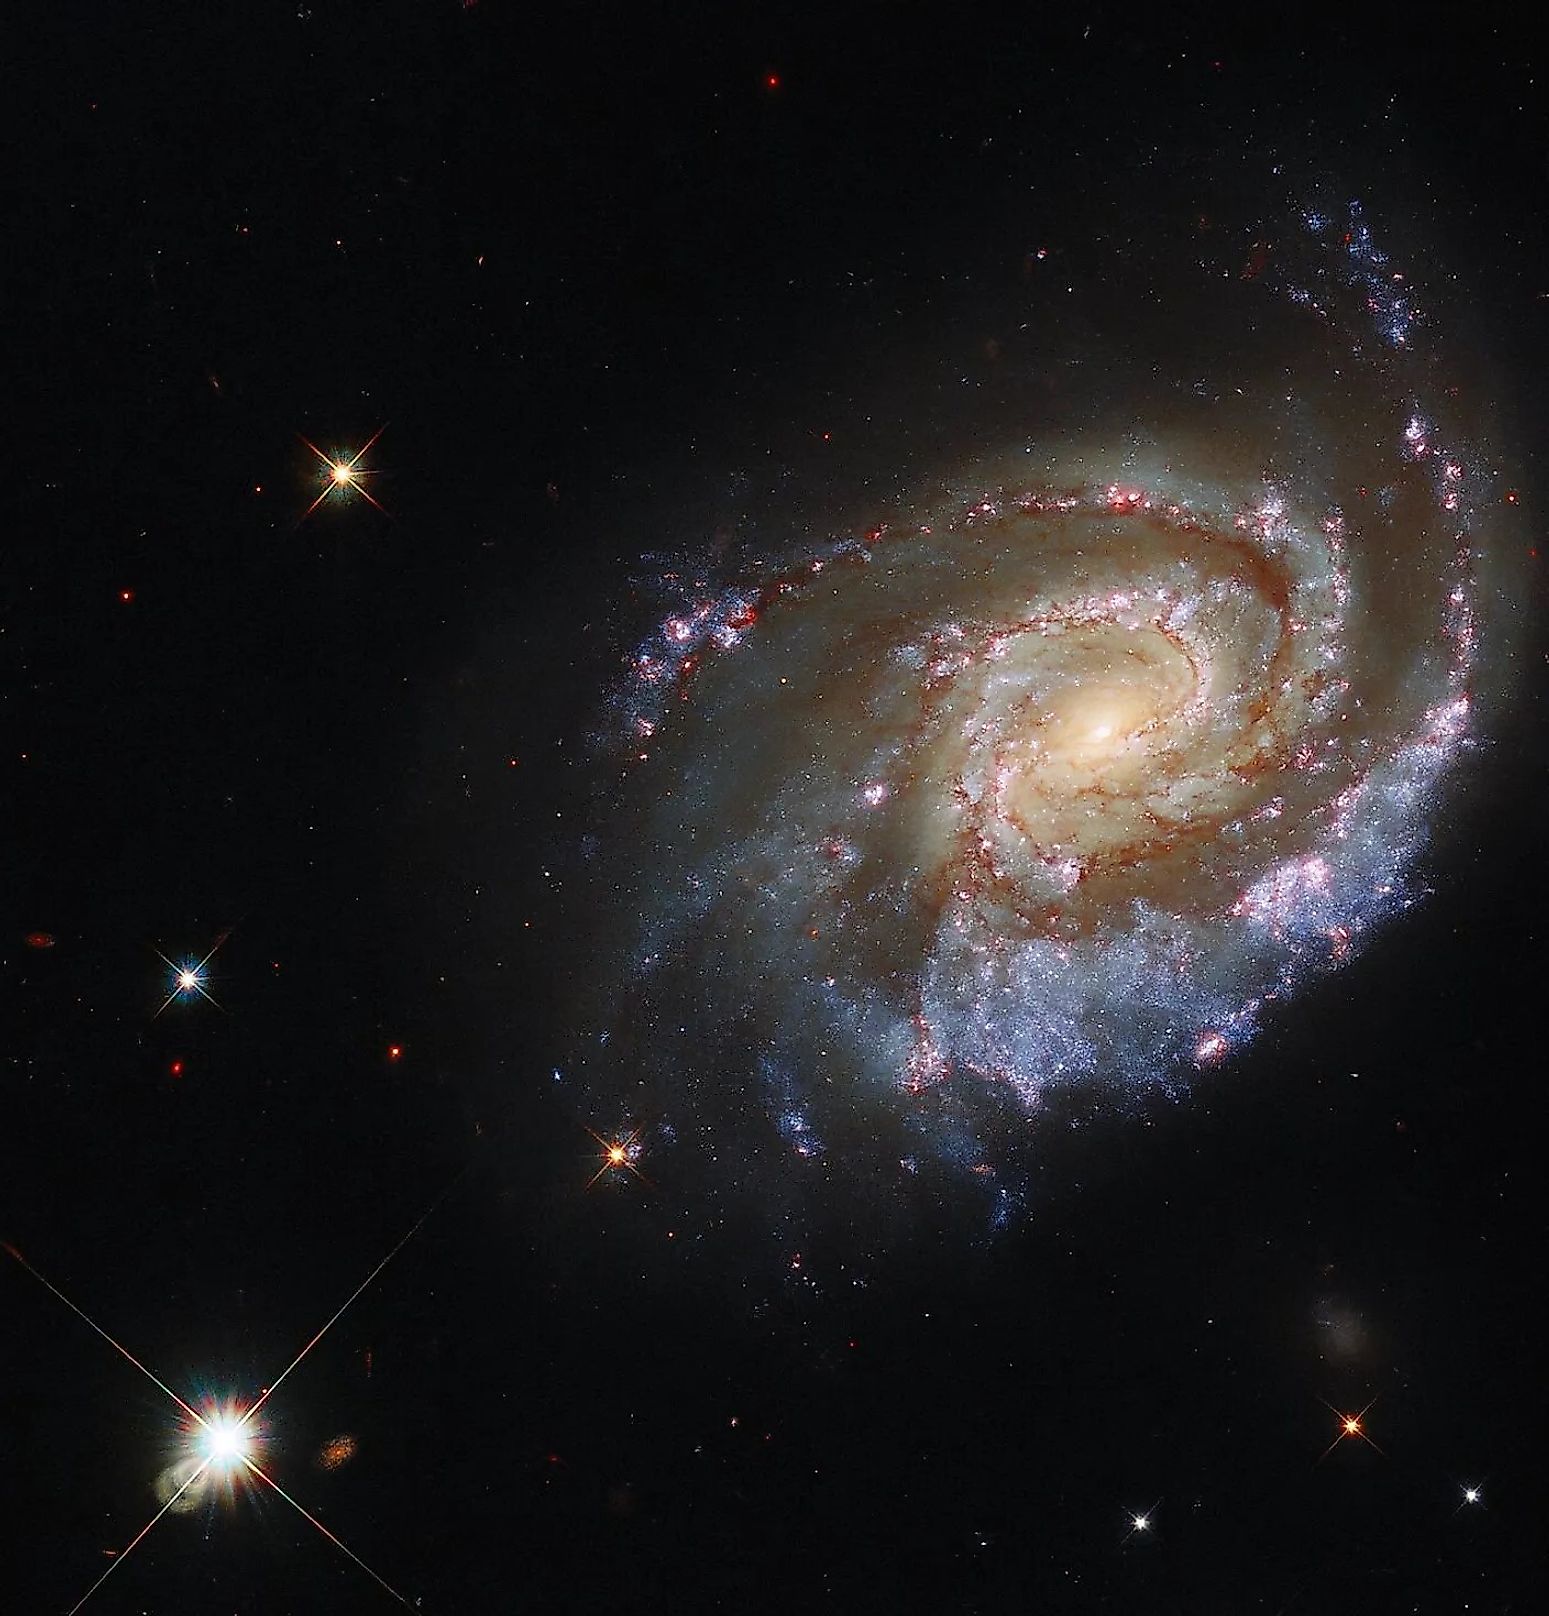 Hubble image of a distant galaxy. Image credit: NASA/ESA